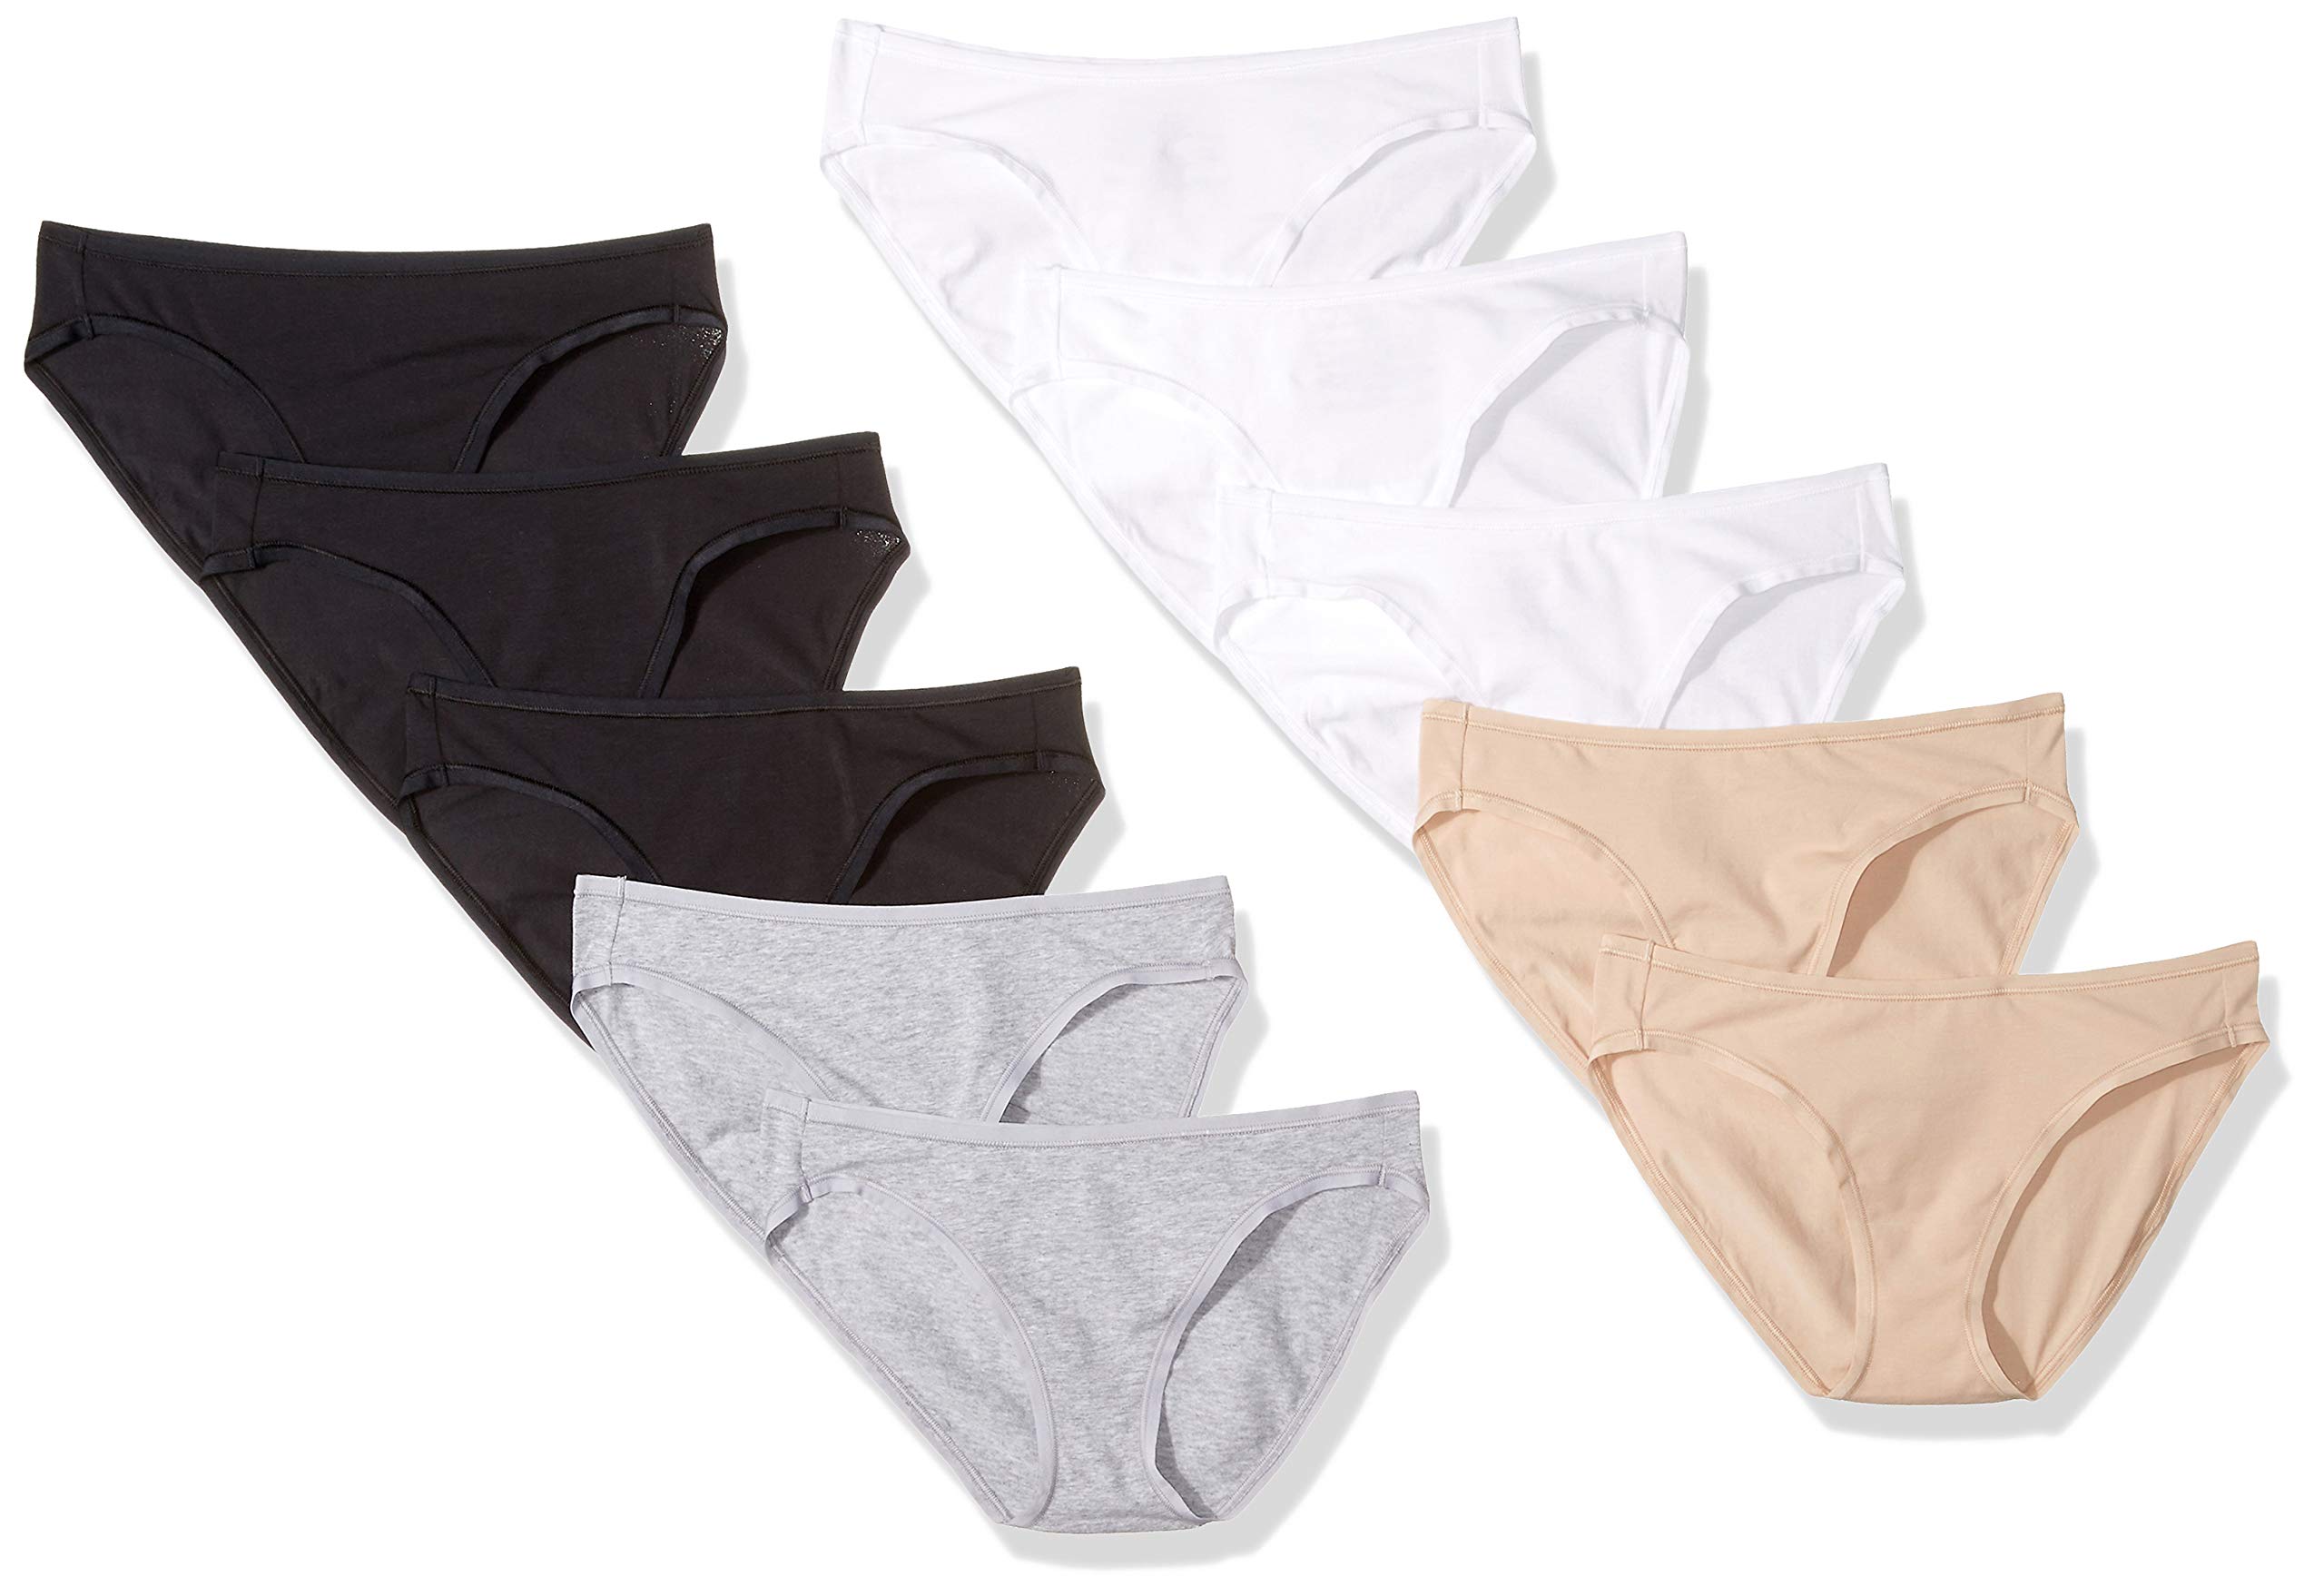 NINGMI Ladies 5-Pack Underwear Stretchy Comfortable High Waist Soft Cotton Full Briefs Basic Style Panties